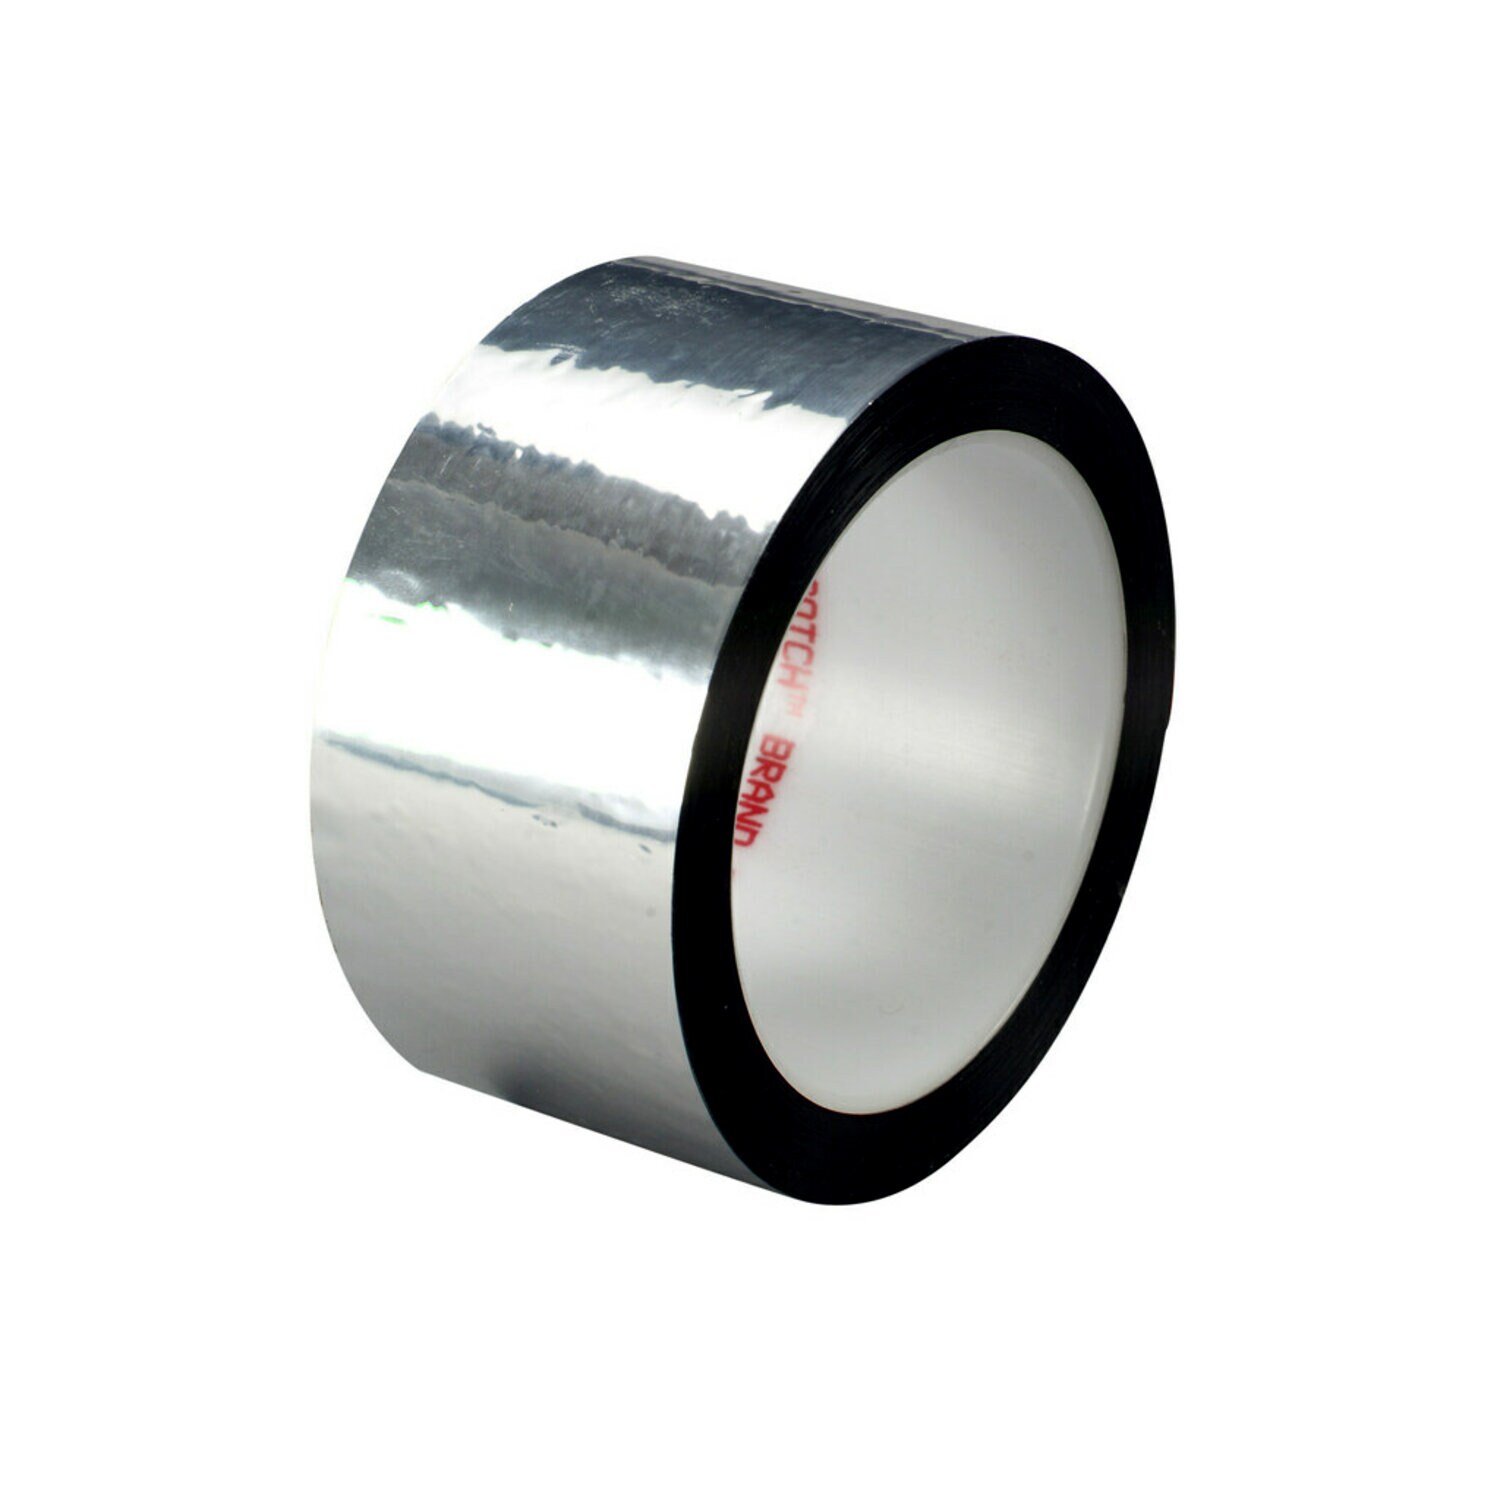 7000047520 - 3M Polyester Film Tape 850, Silver, 1/2 in x 72 yd, 1.9 mil, 72 rolls
per case